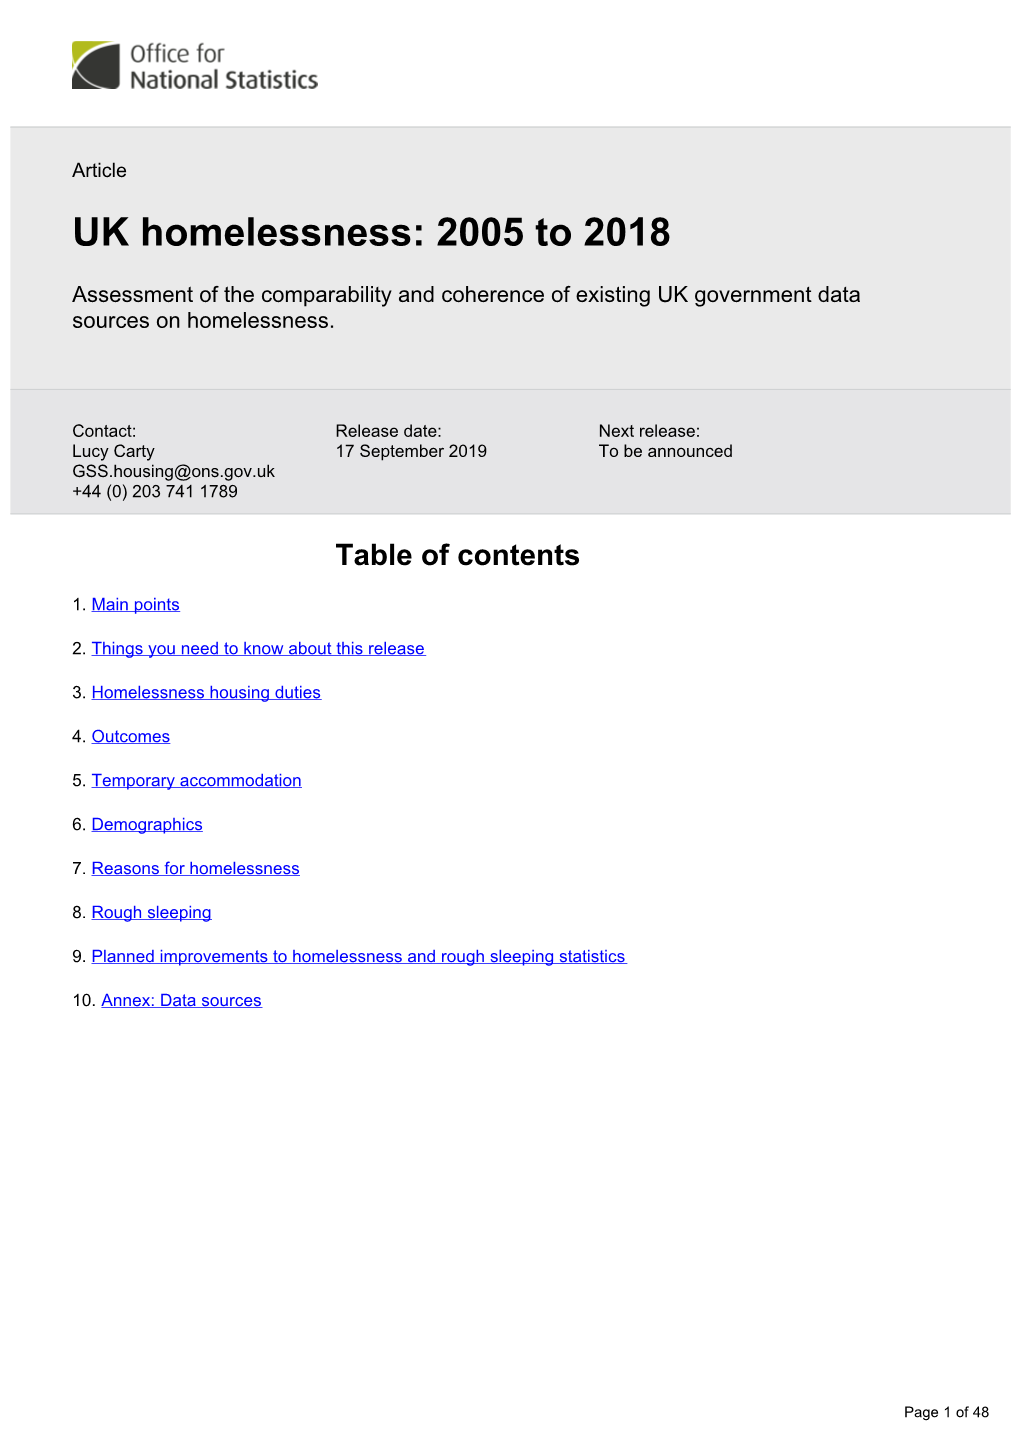 UK Homelessness: 2005 to 2018